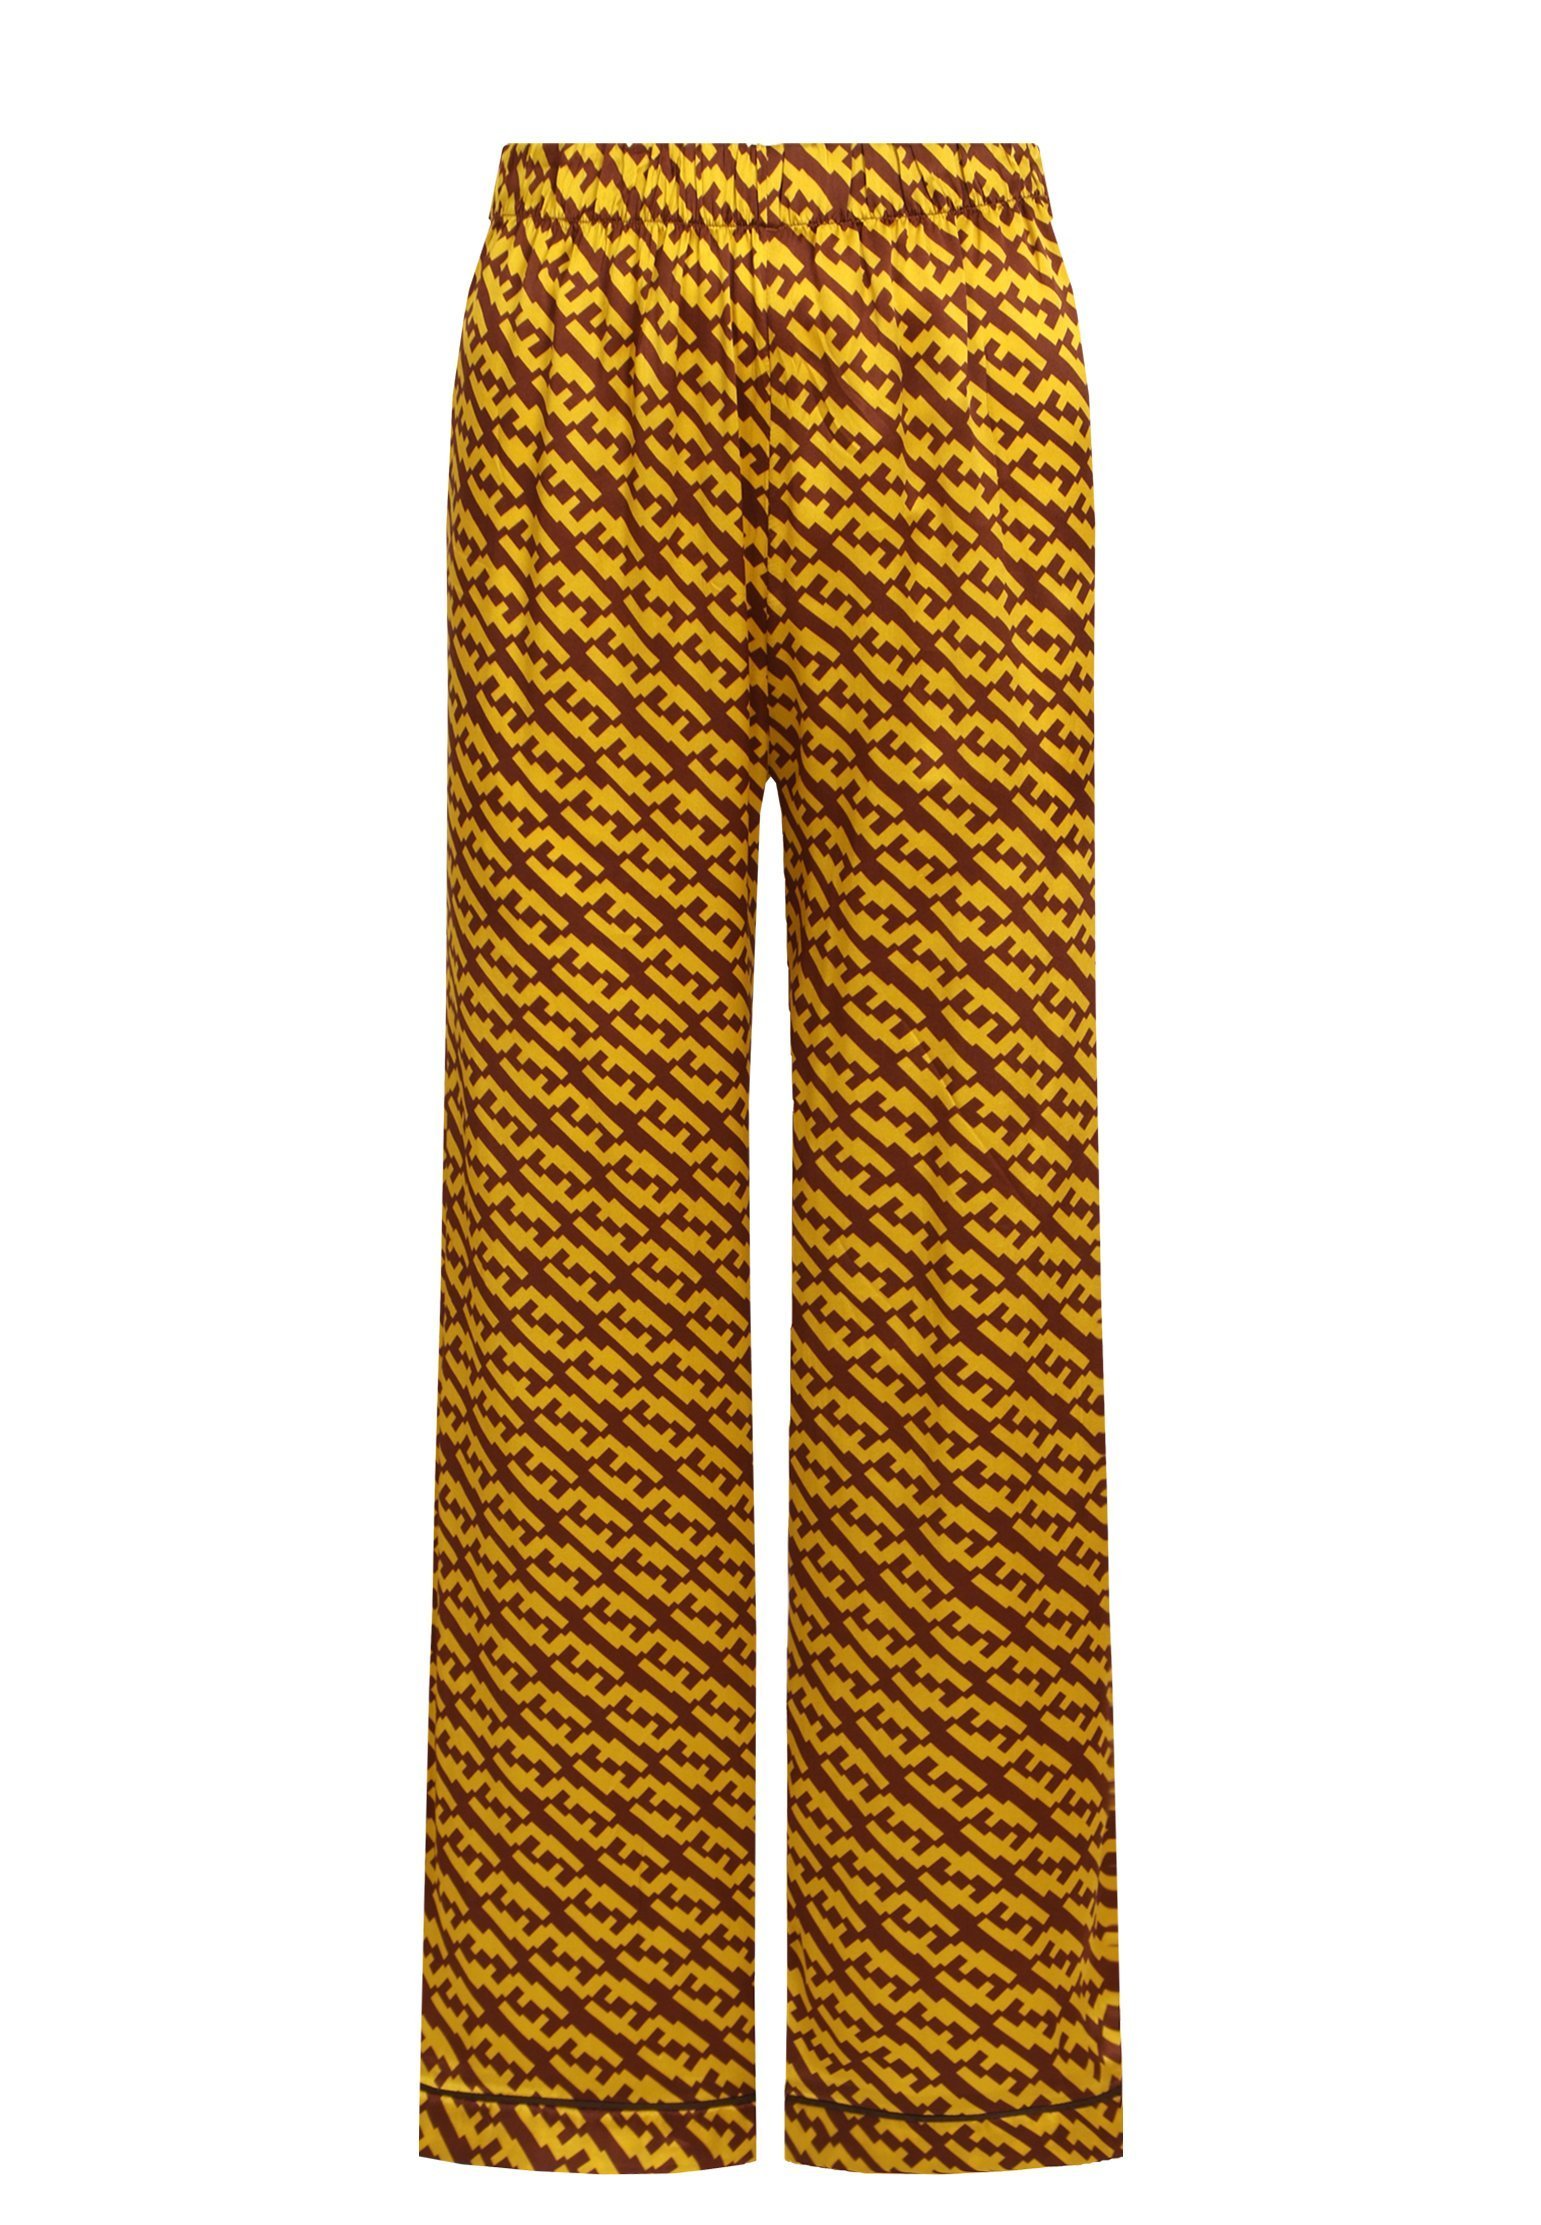 Trousers ALESSA Color: multicolor (Code: 3264) in online store Allure